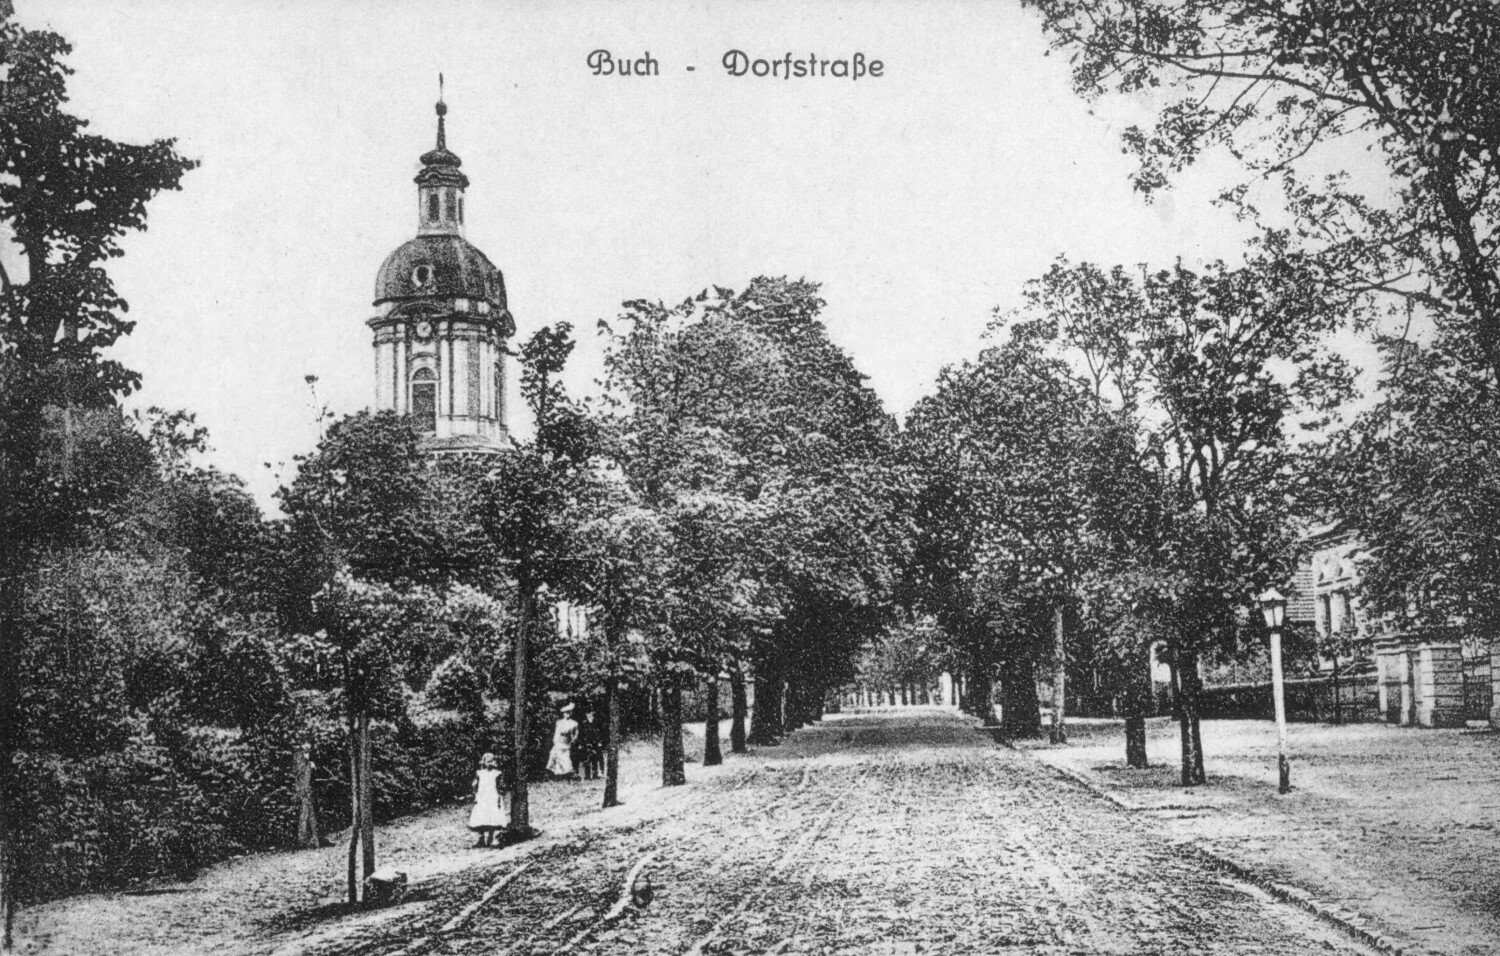 Buch, Dorfstraße, Postkarte um 1900